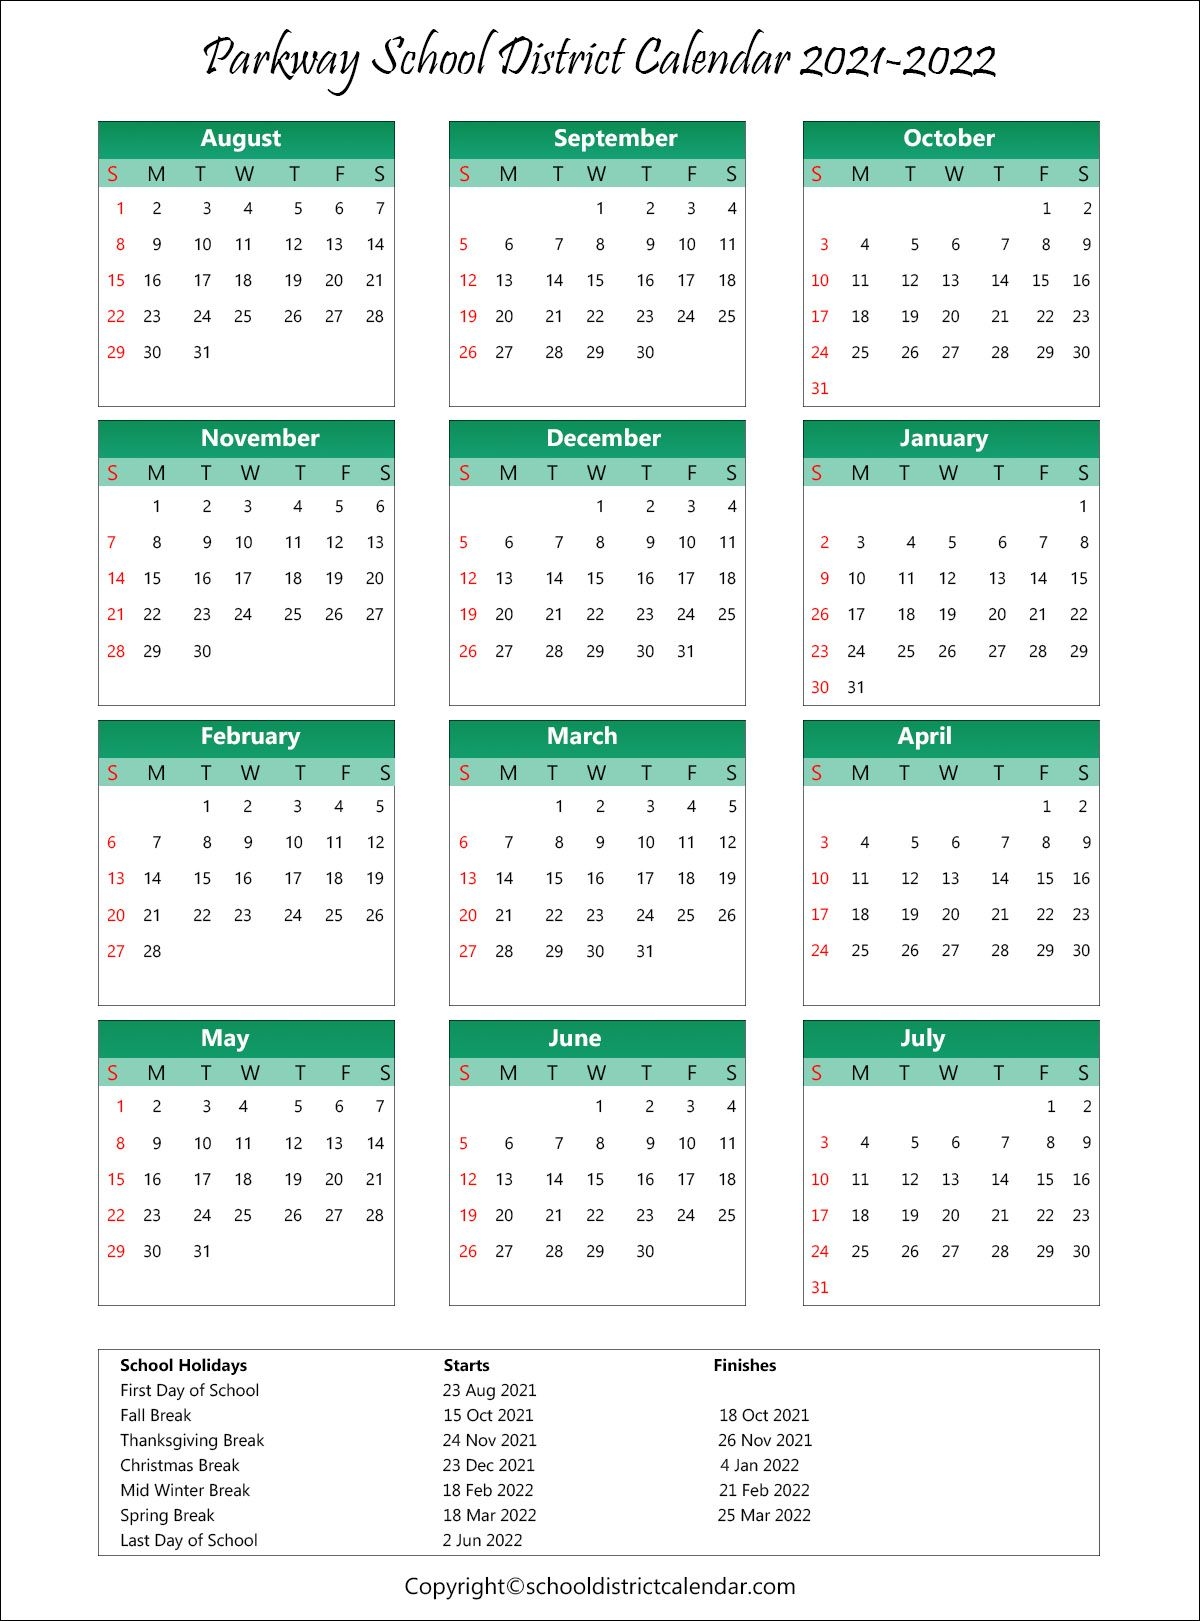 Parkway School District Calendar Holidays 2021-2022